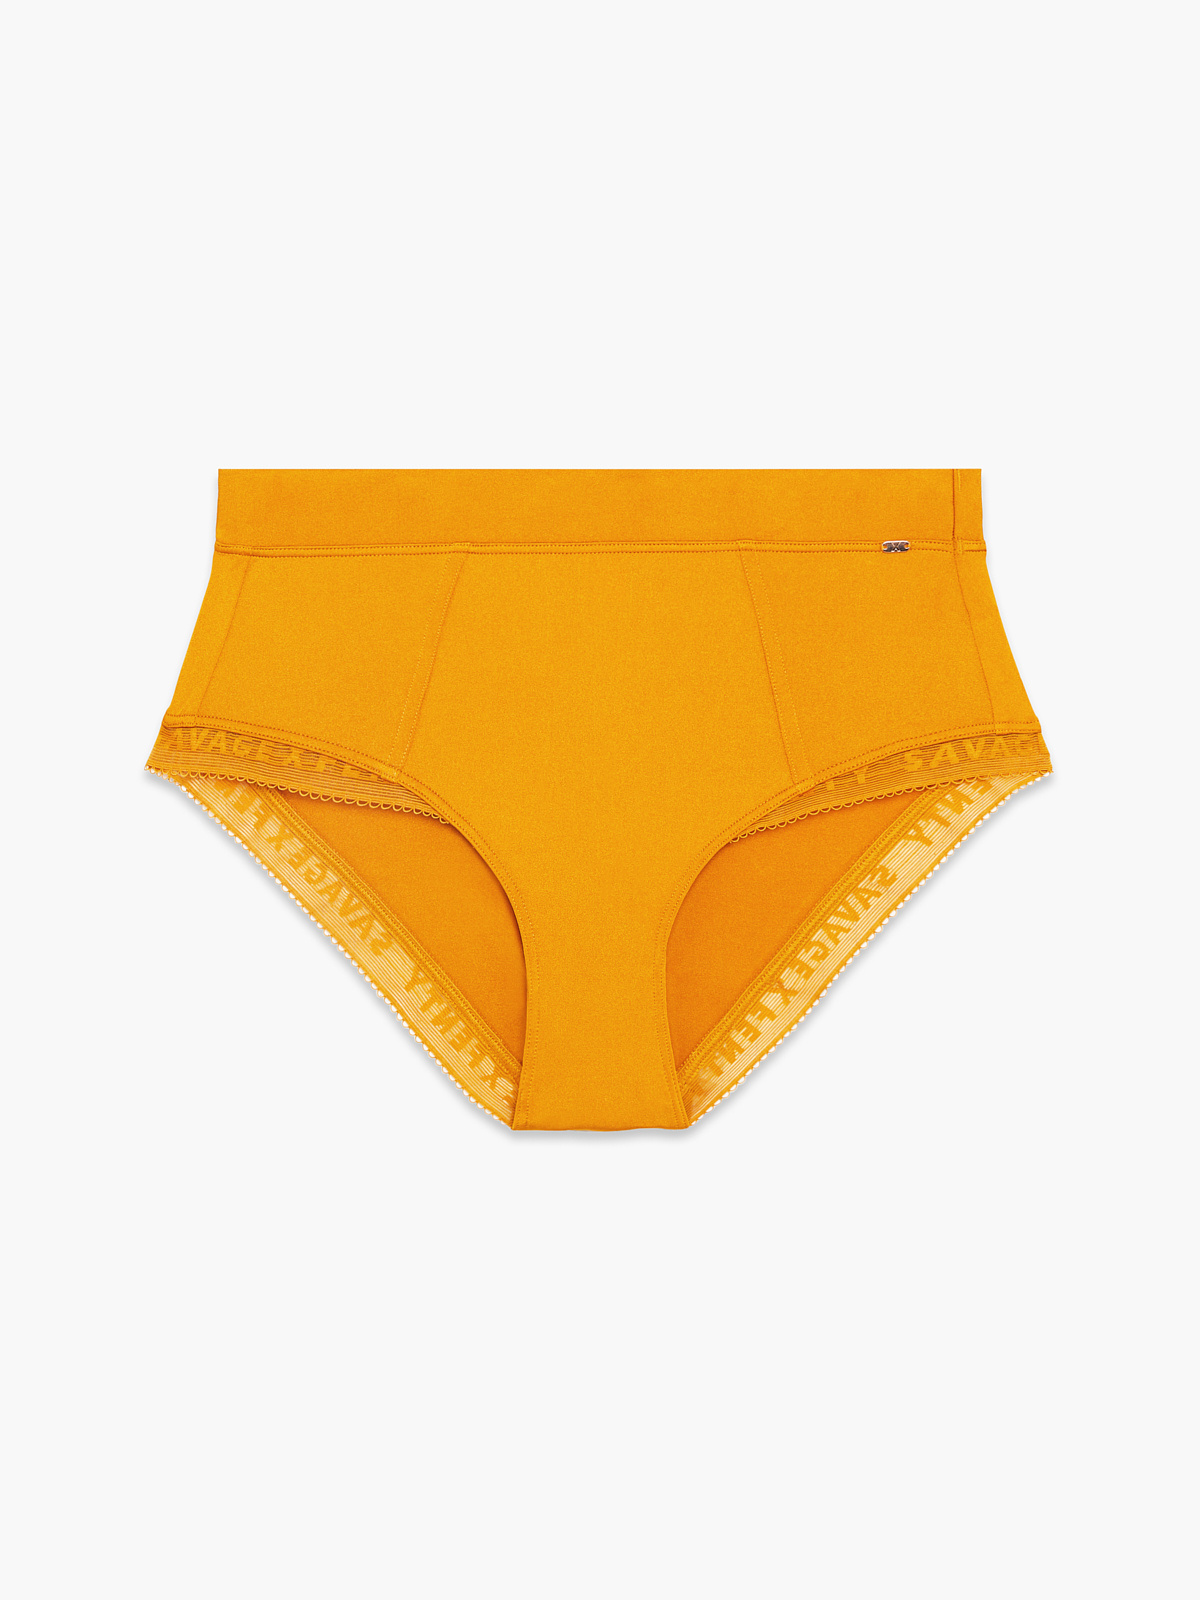 NEW Microfiber Logo-Trim High-Waist Cheeky Panty in Gold & Yellow